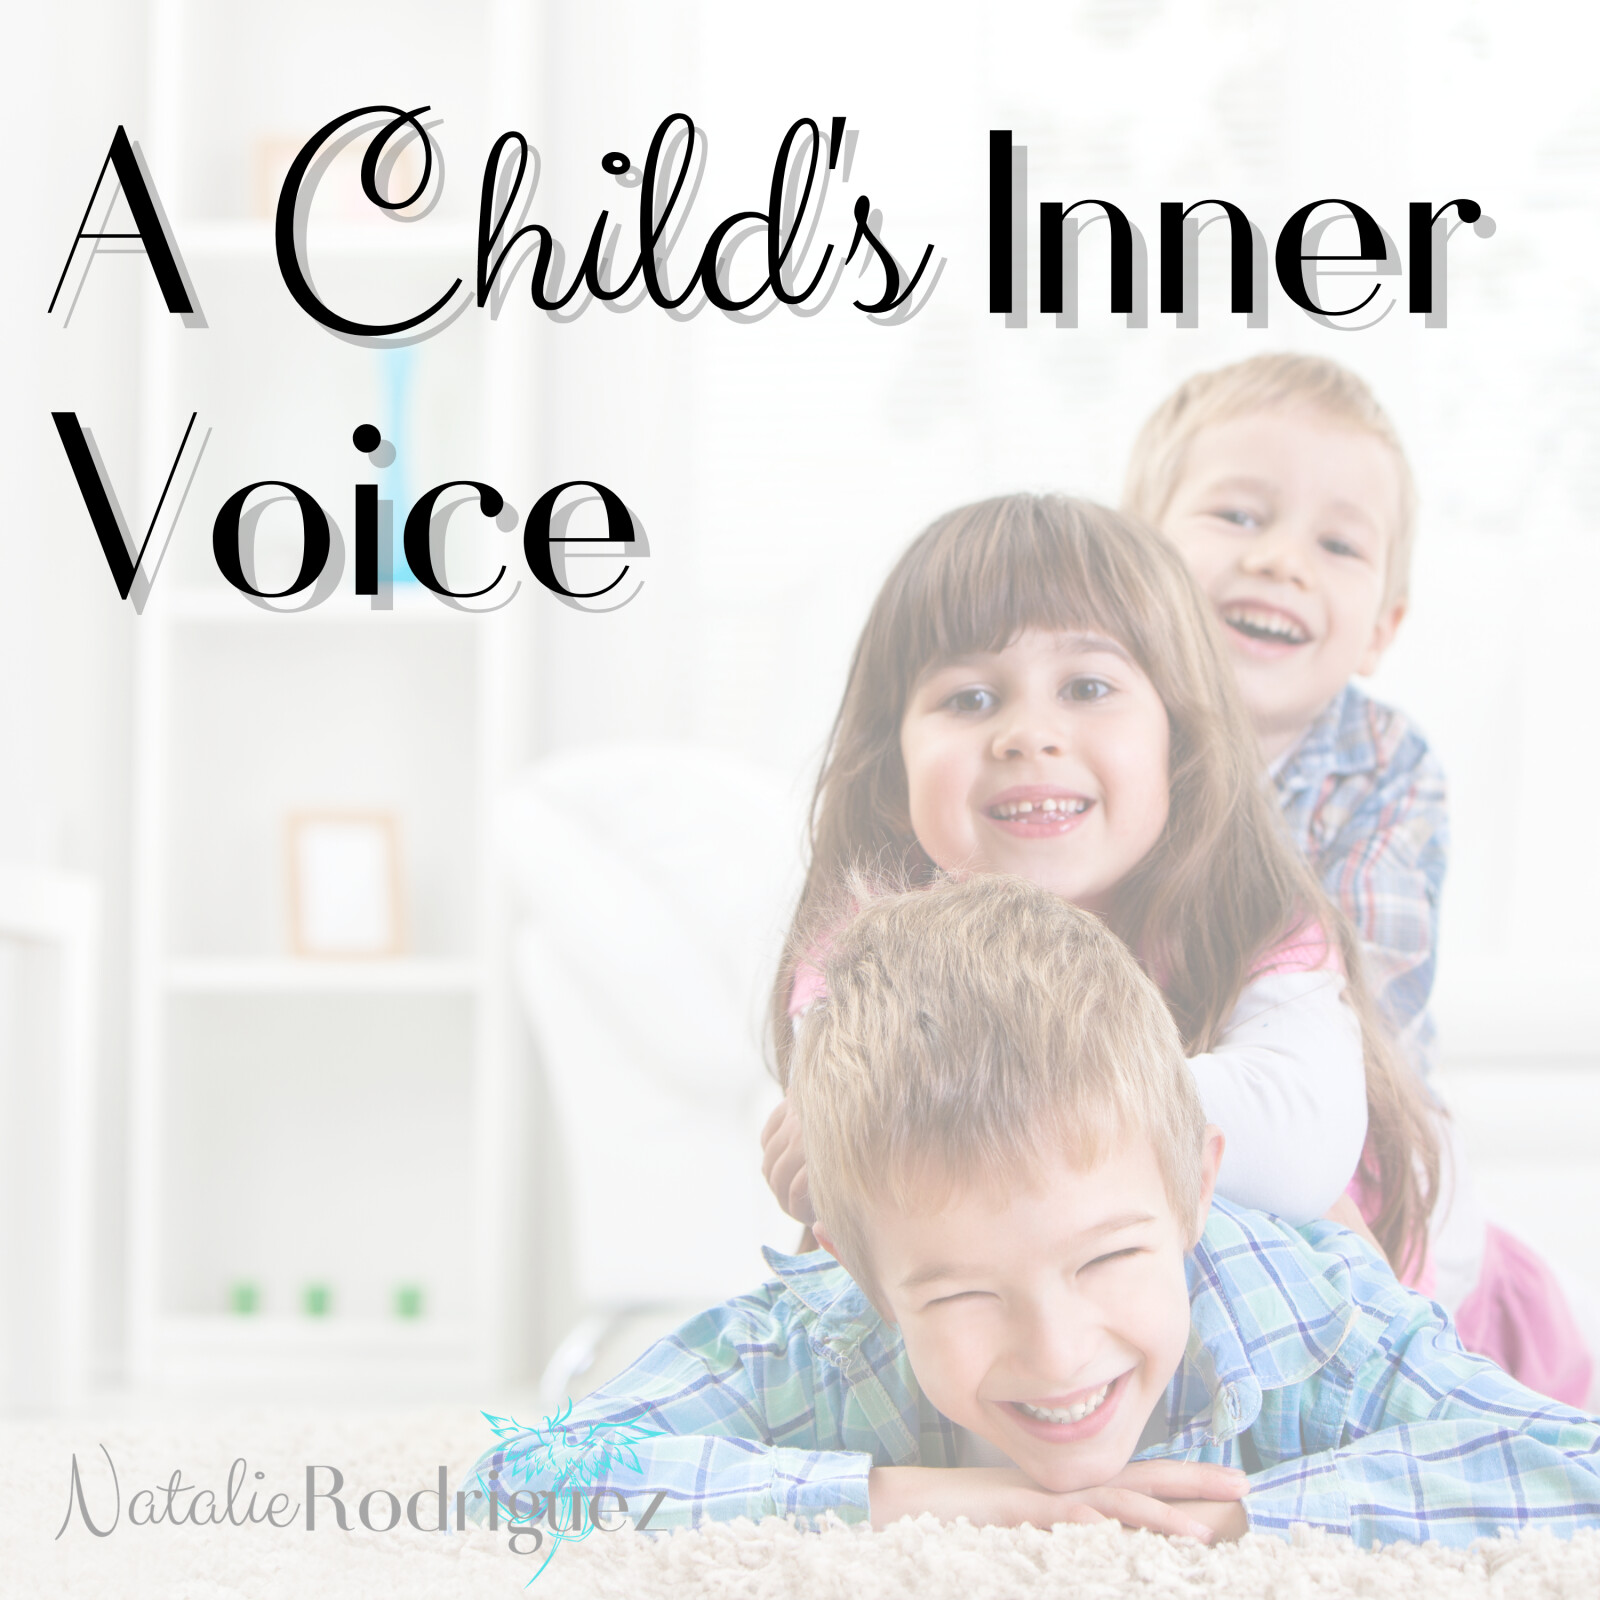 A Child's Inner Voice